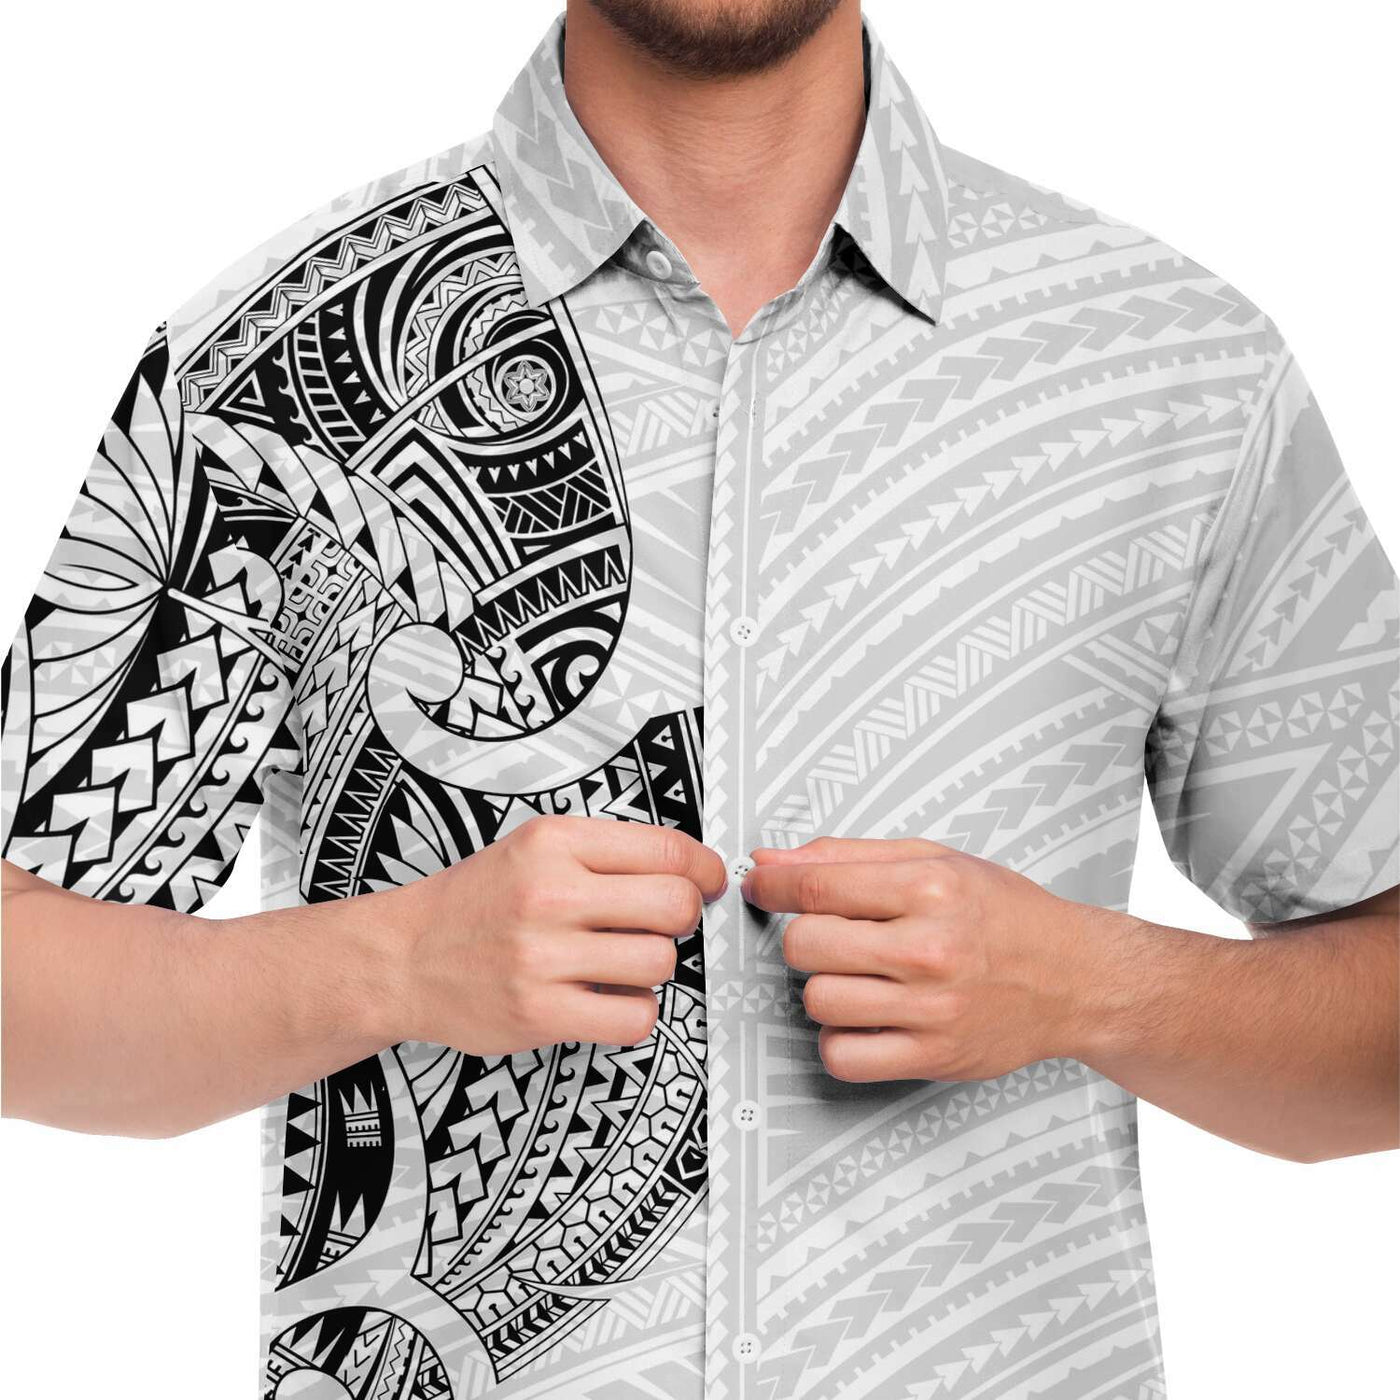 Polynesian Design Baseball Jerseys - Atikapu 00319